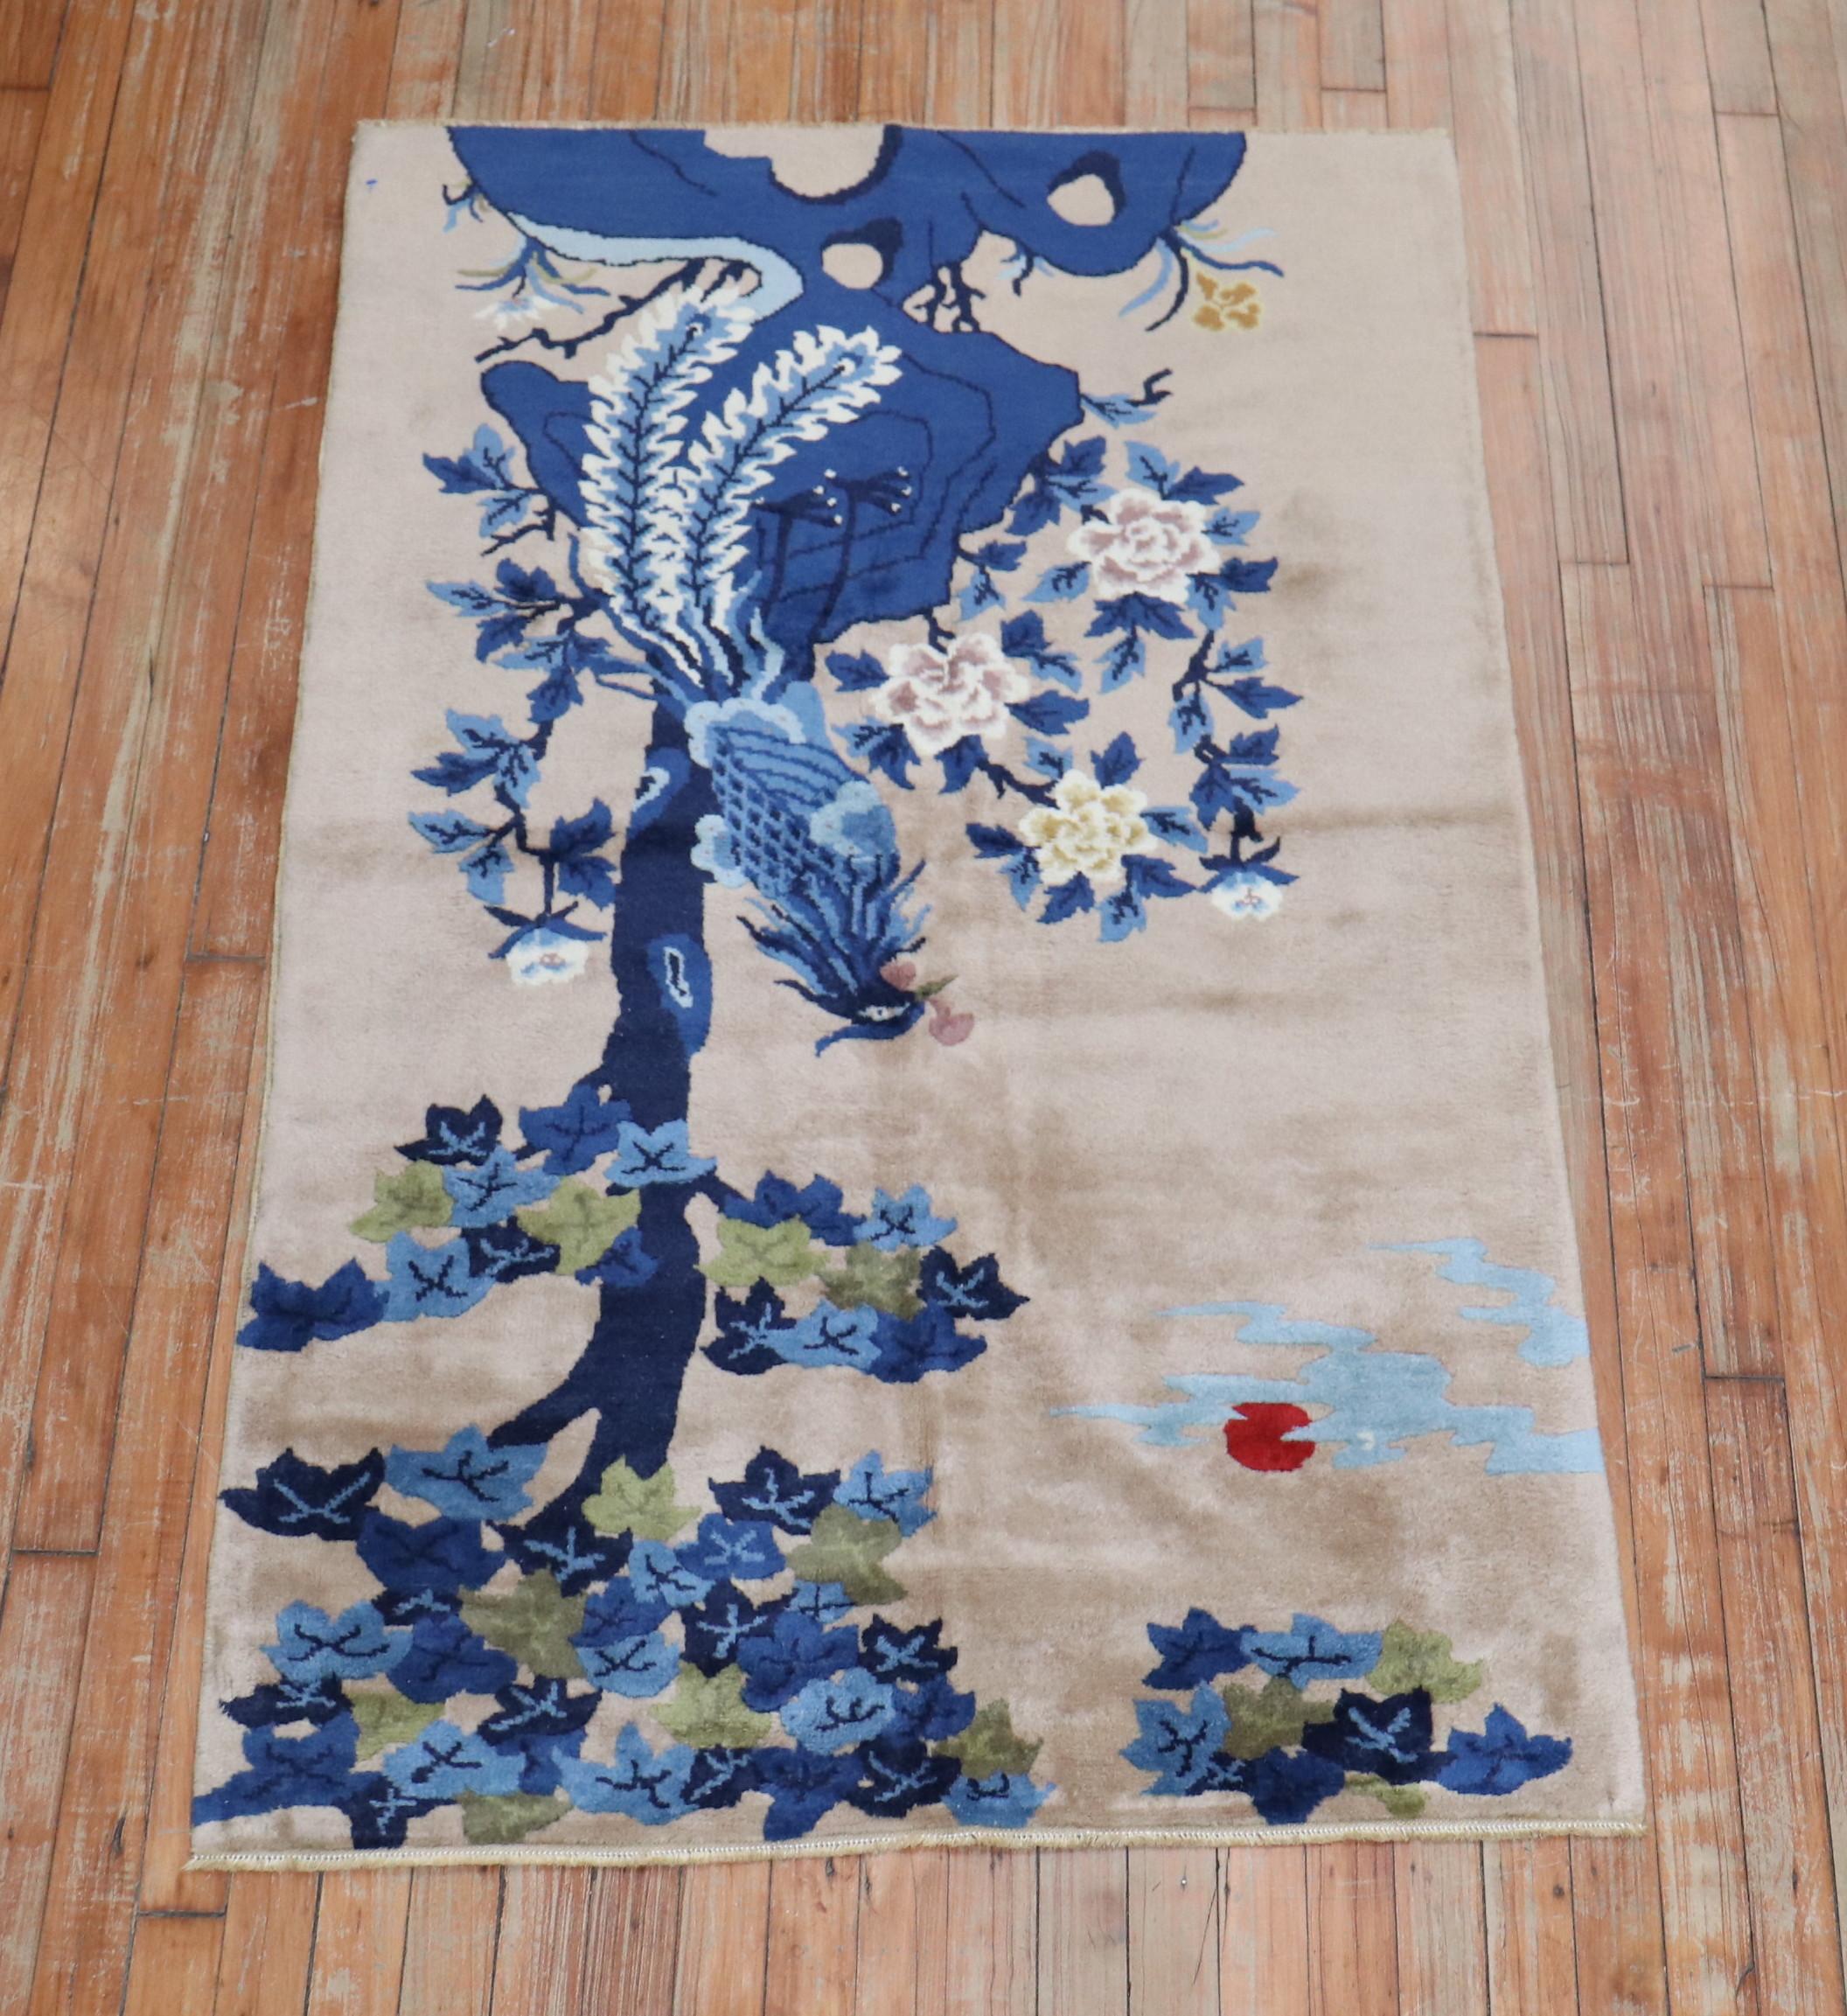 Floral motif Pictorial mid 20th century Tibetan rug

Measures: 3'1